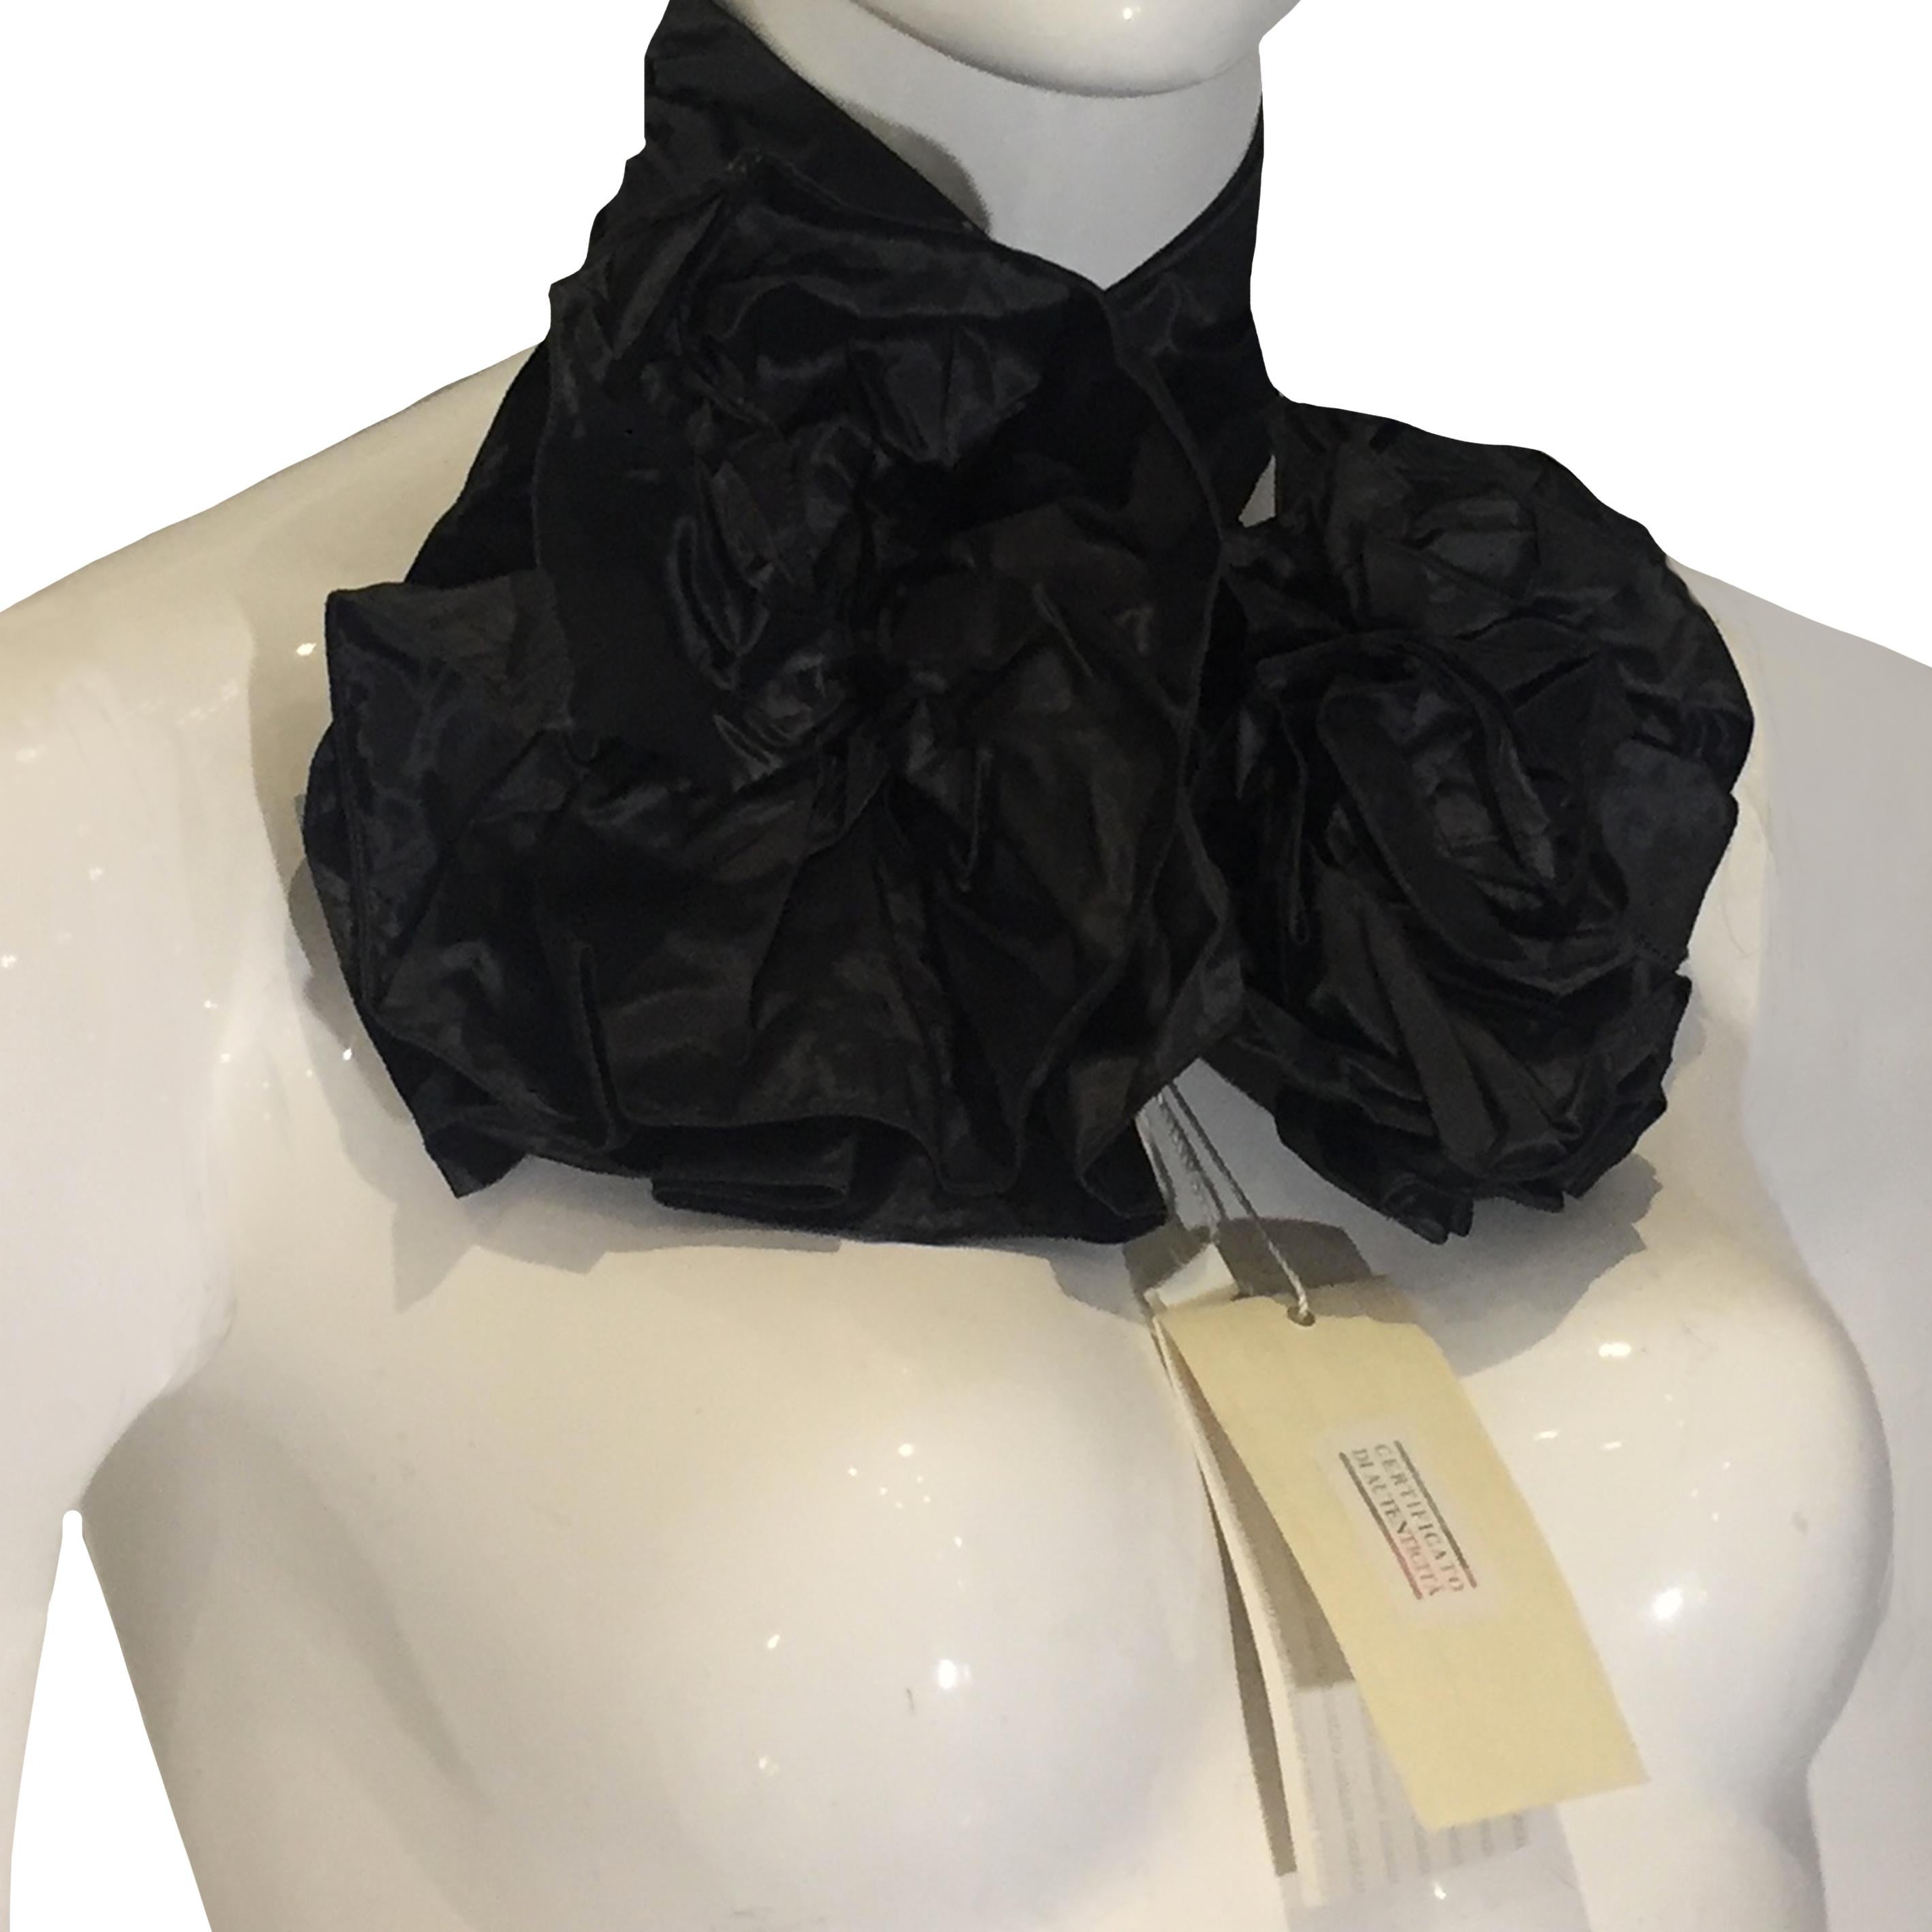 GIORGIO ARMANI Dark grey silk flower scarf

Tag GIORGIO ARMANI

50cm x 10cm

60% polyester
40% silk

Perfect condition
With tag

Shipping worldwide with tracking number